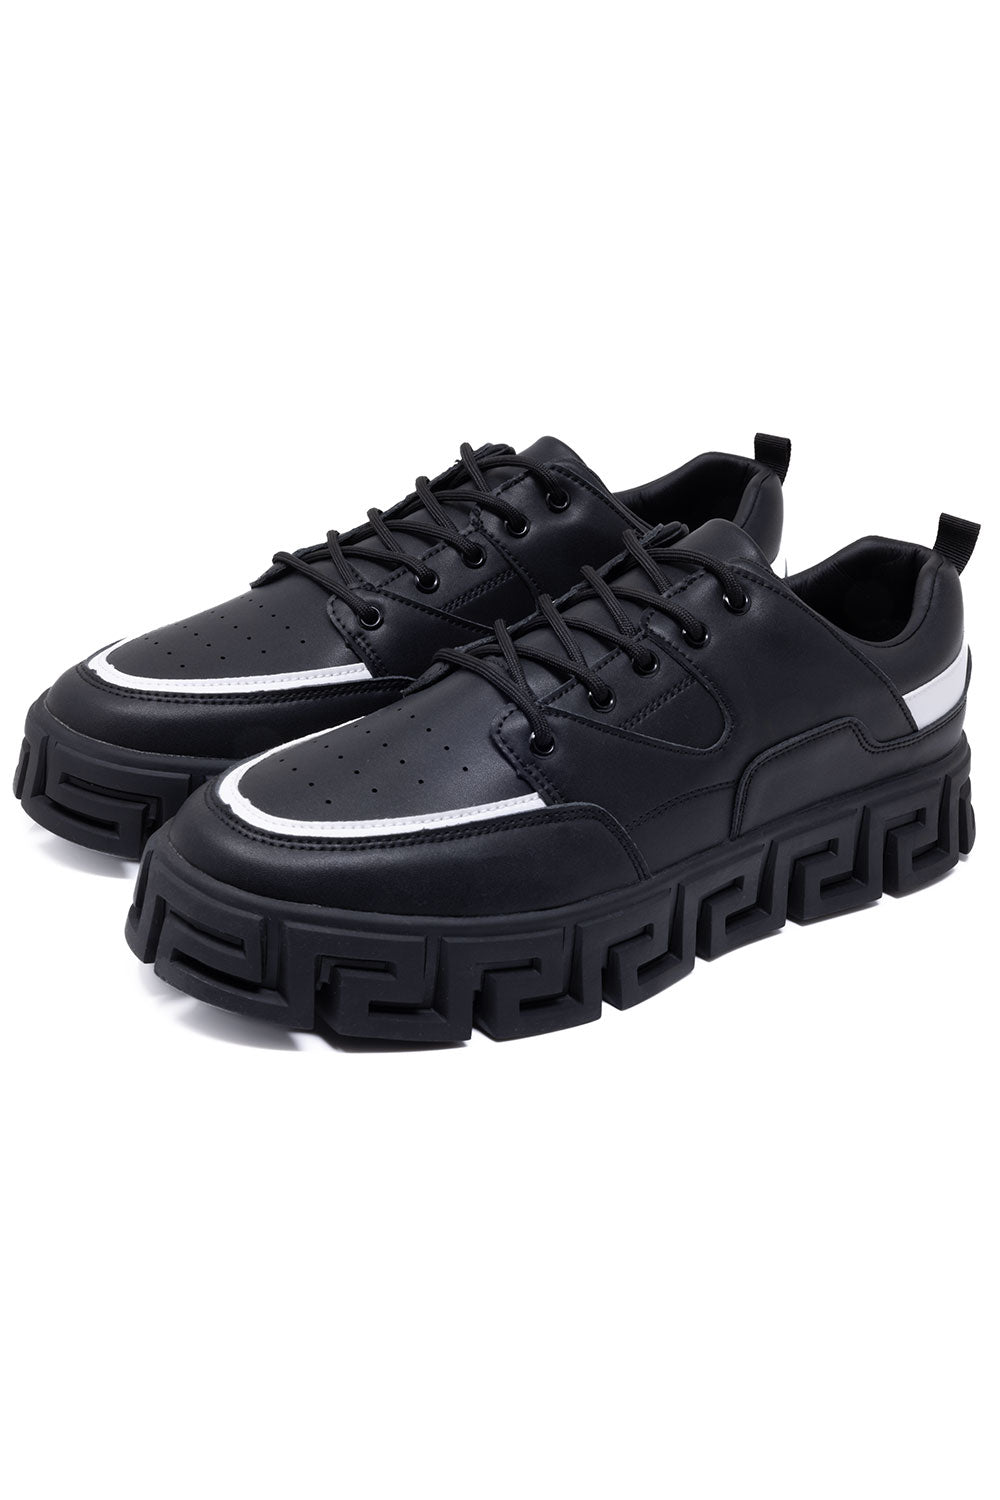 Barabas Men's Premium Greek Key Pattern Walking Sneakers 4SK03 Black